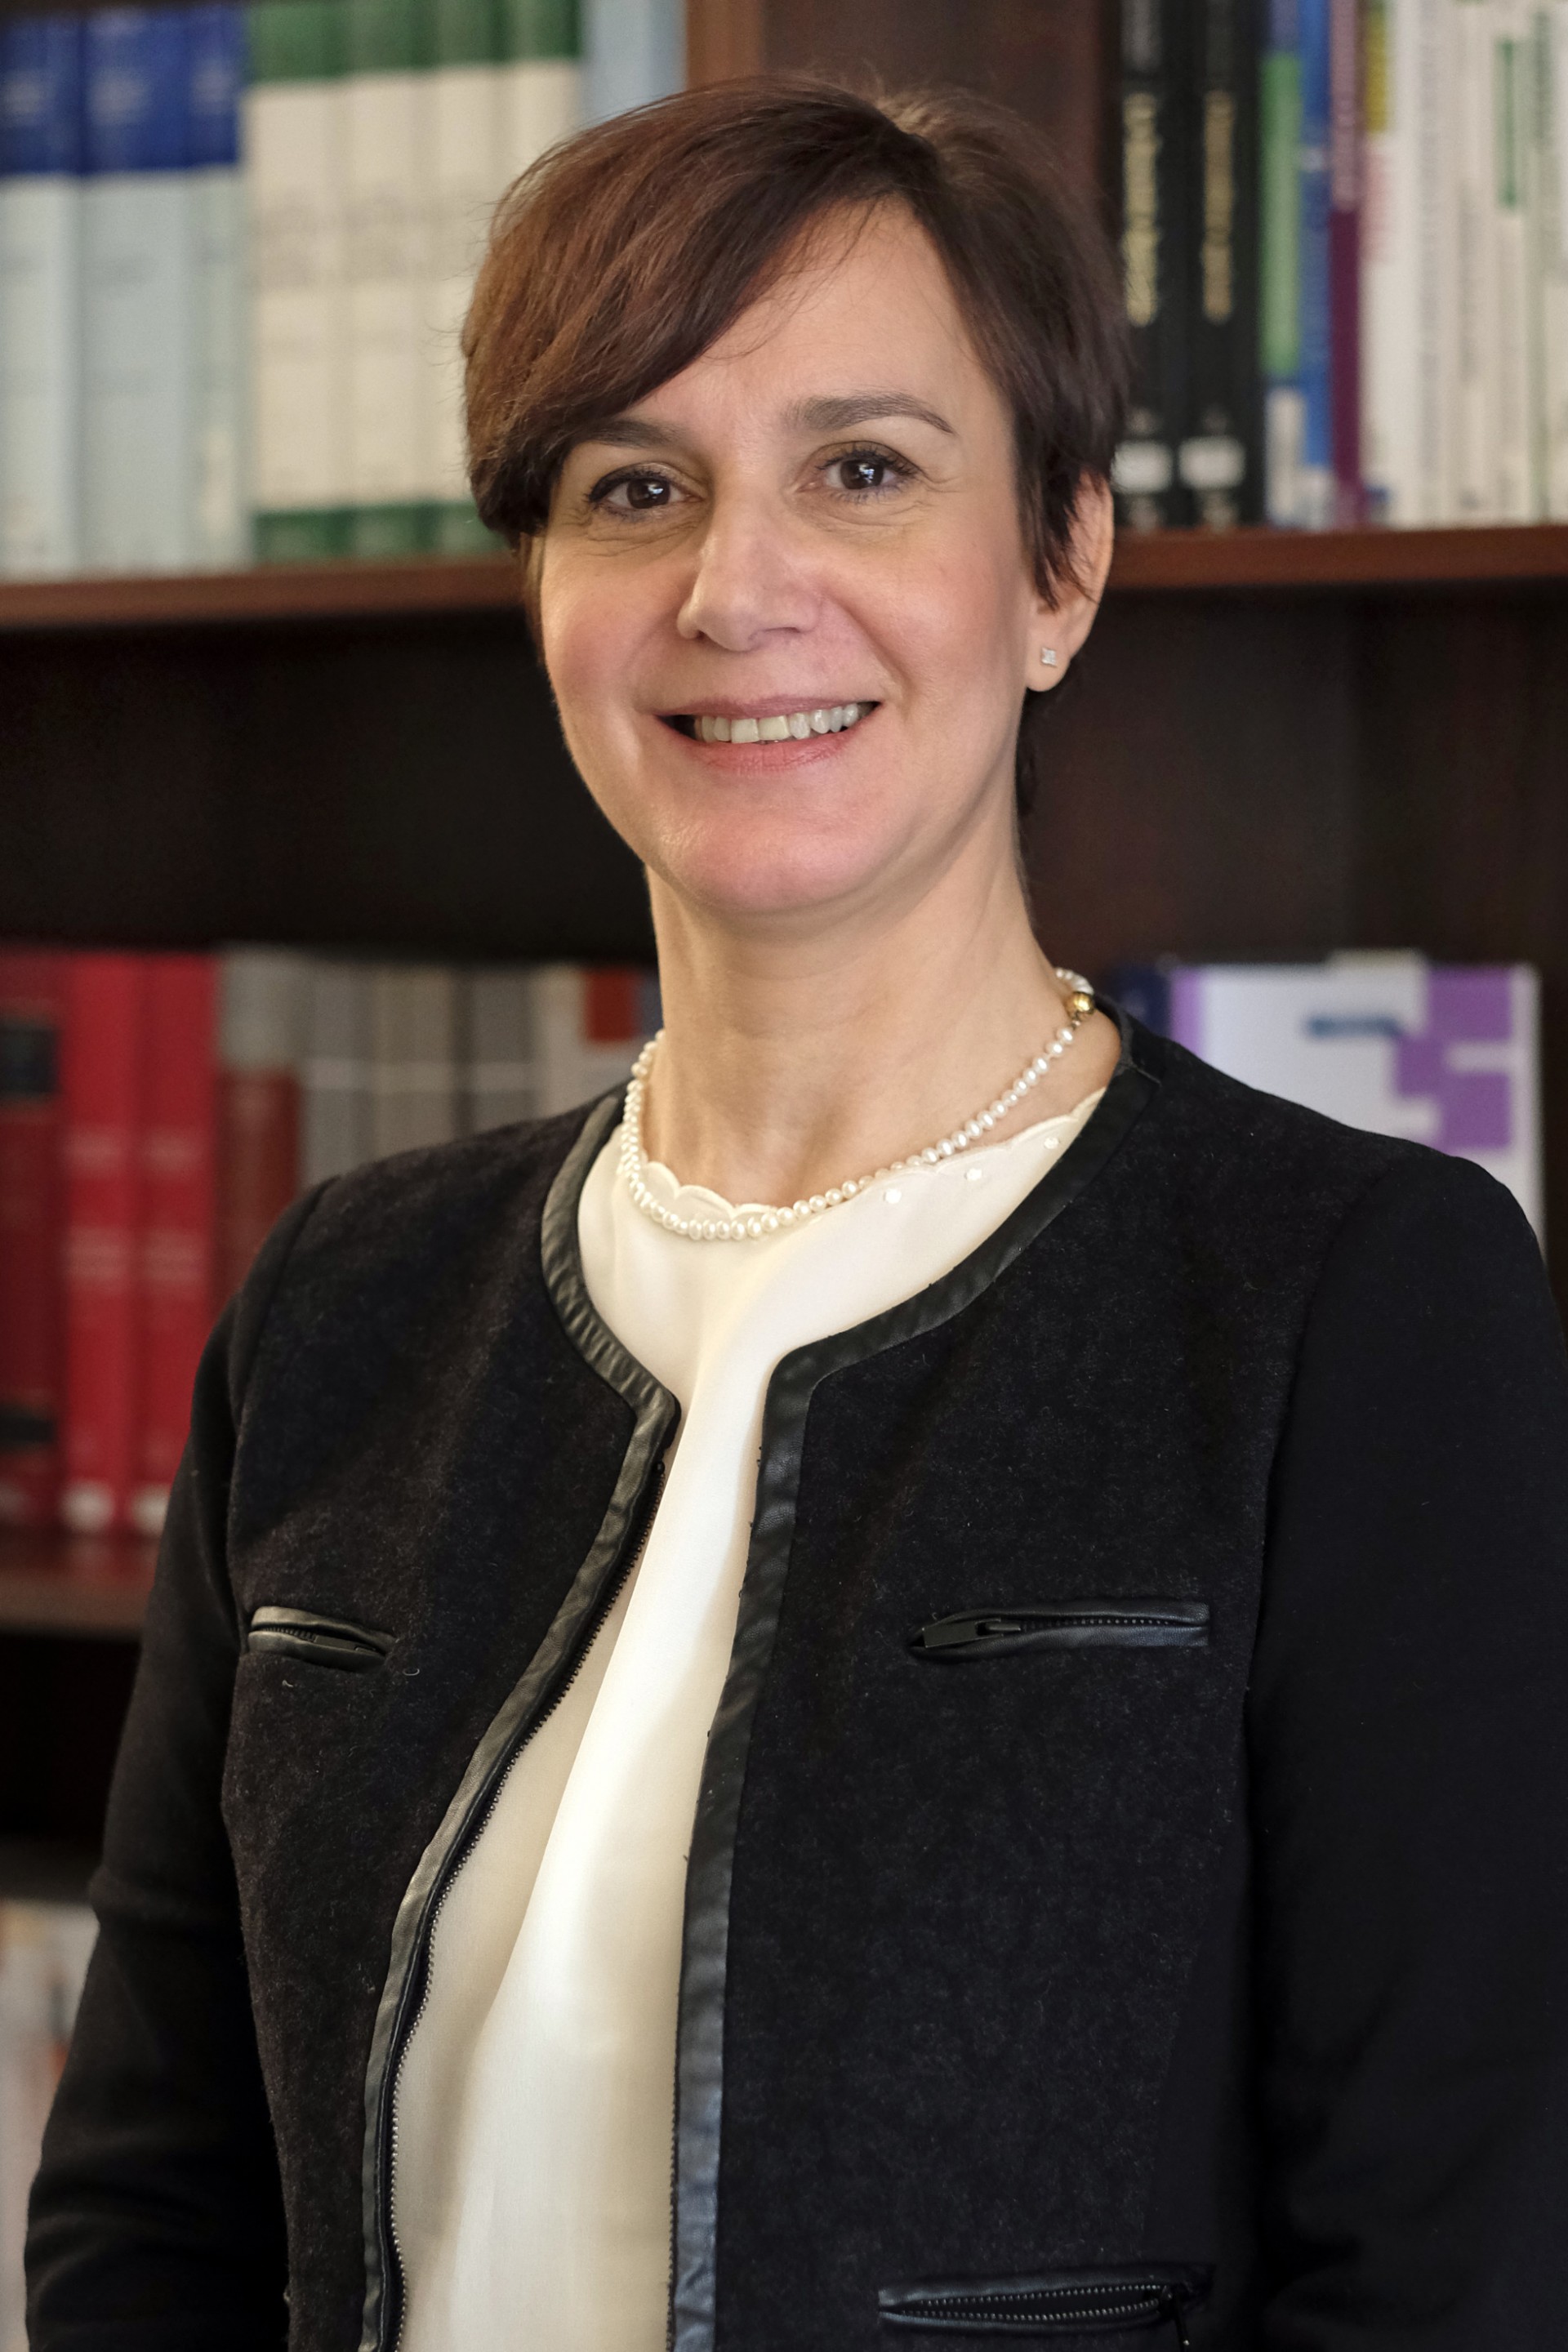 Dr. Anna Fedrizzi